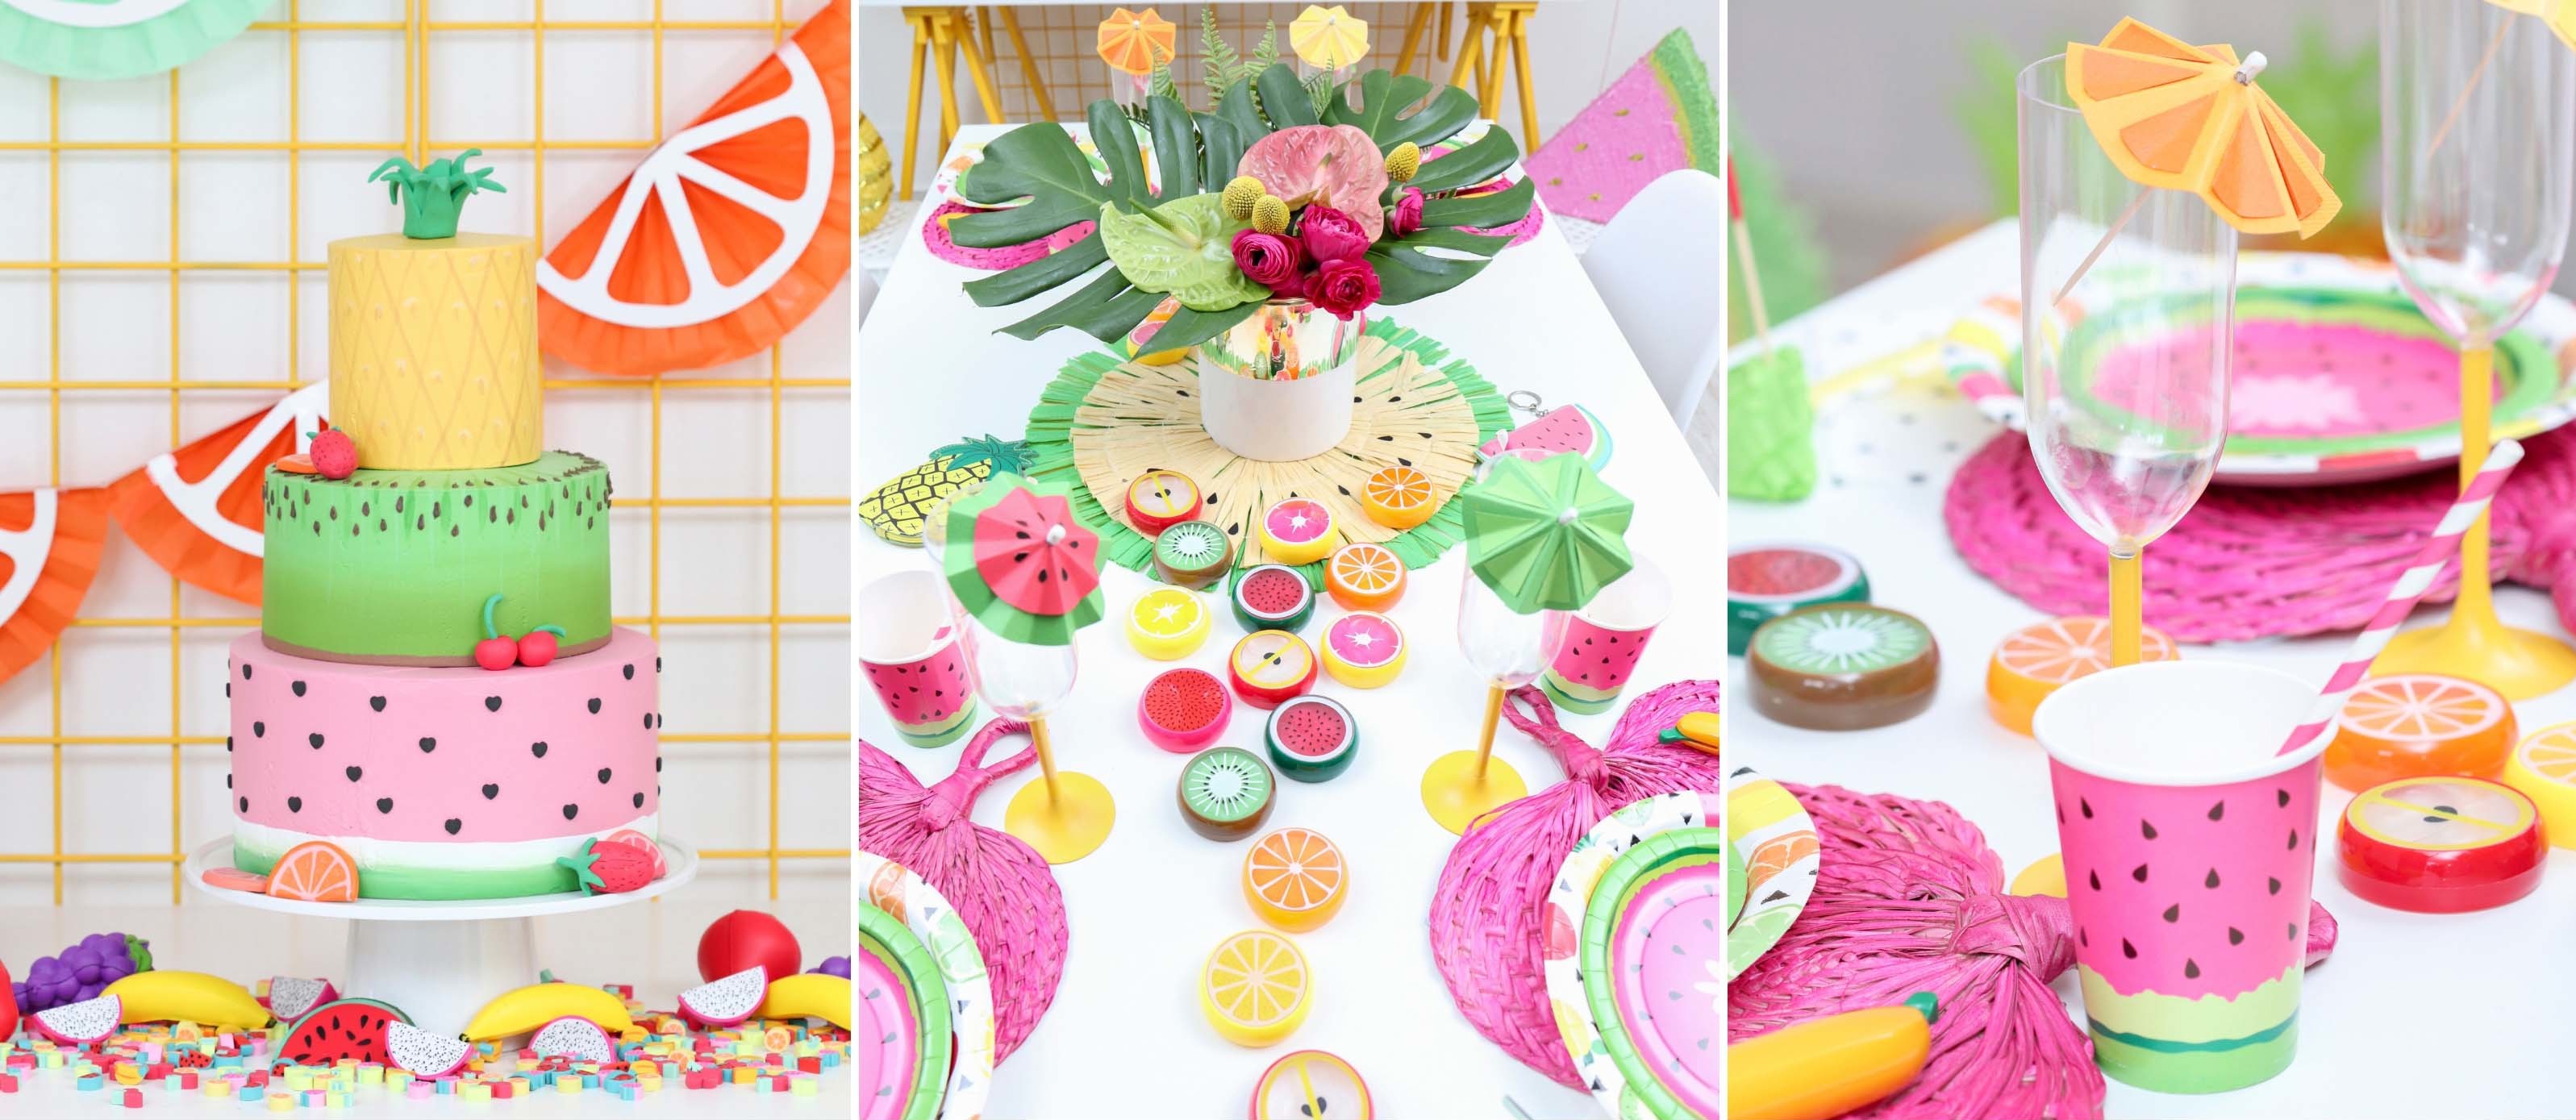 Bridal Shower Mimosa Bar Ideas - DIY Cuteness